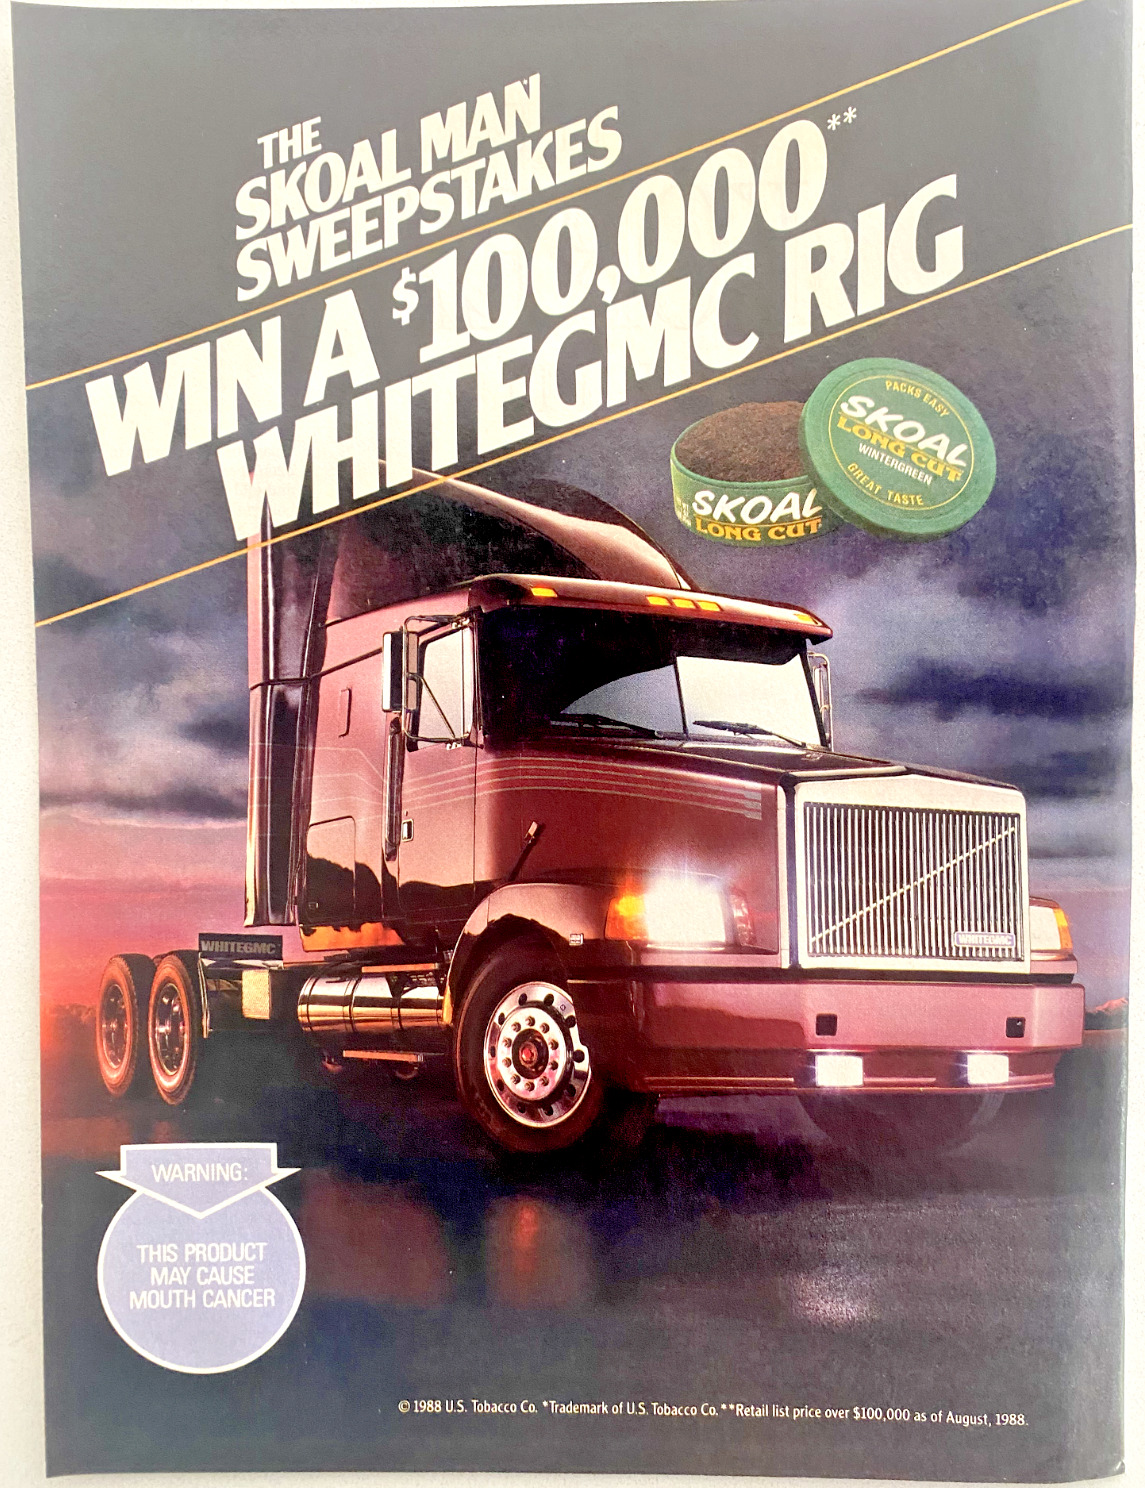 Skoal Long Cut Wintergreen U.S. Tobacco Co. Vintage 1988 Magazine Advertisement